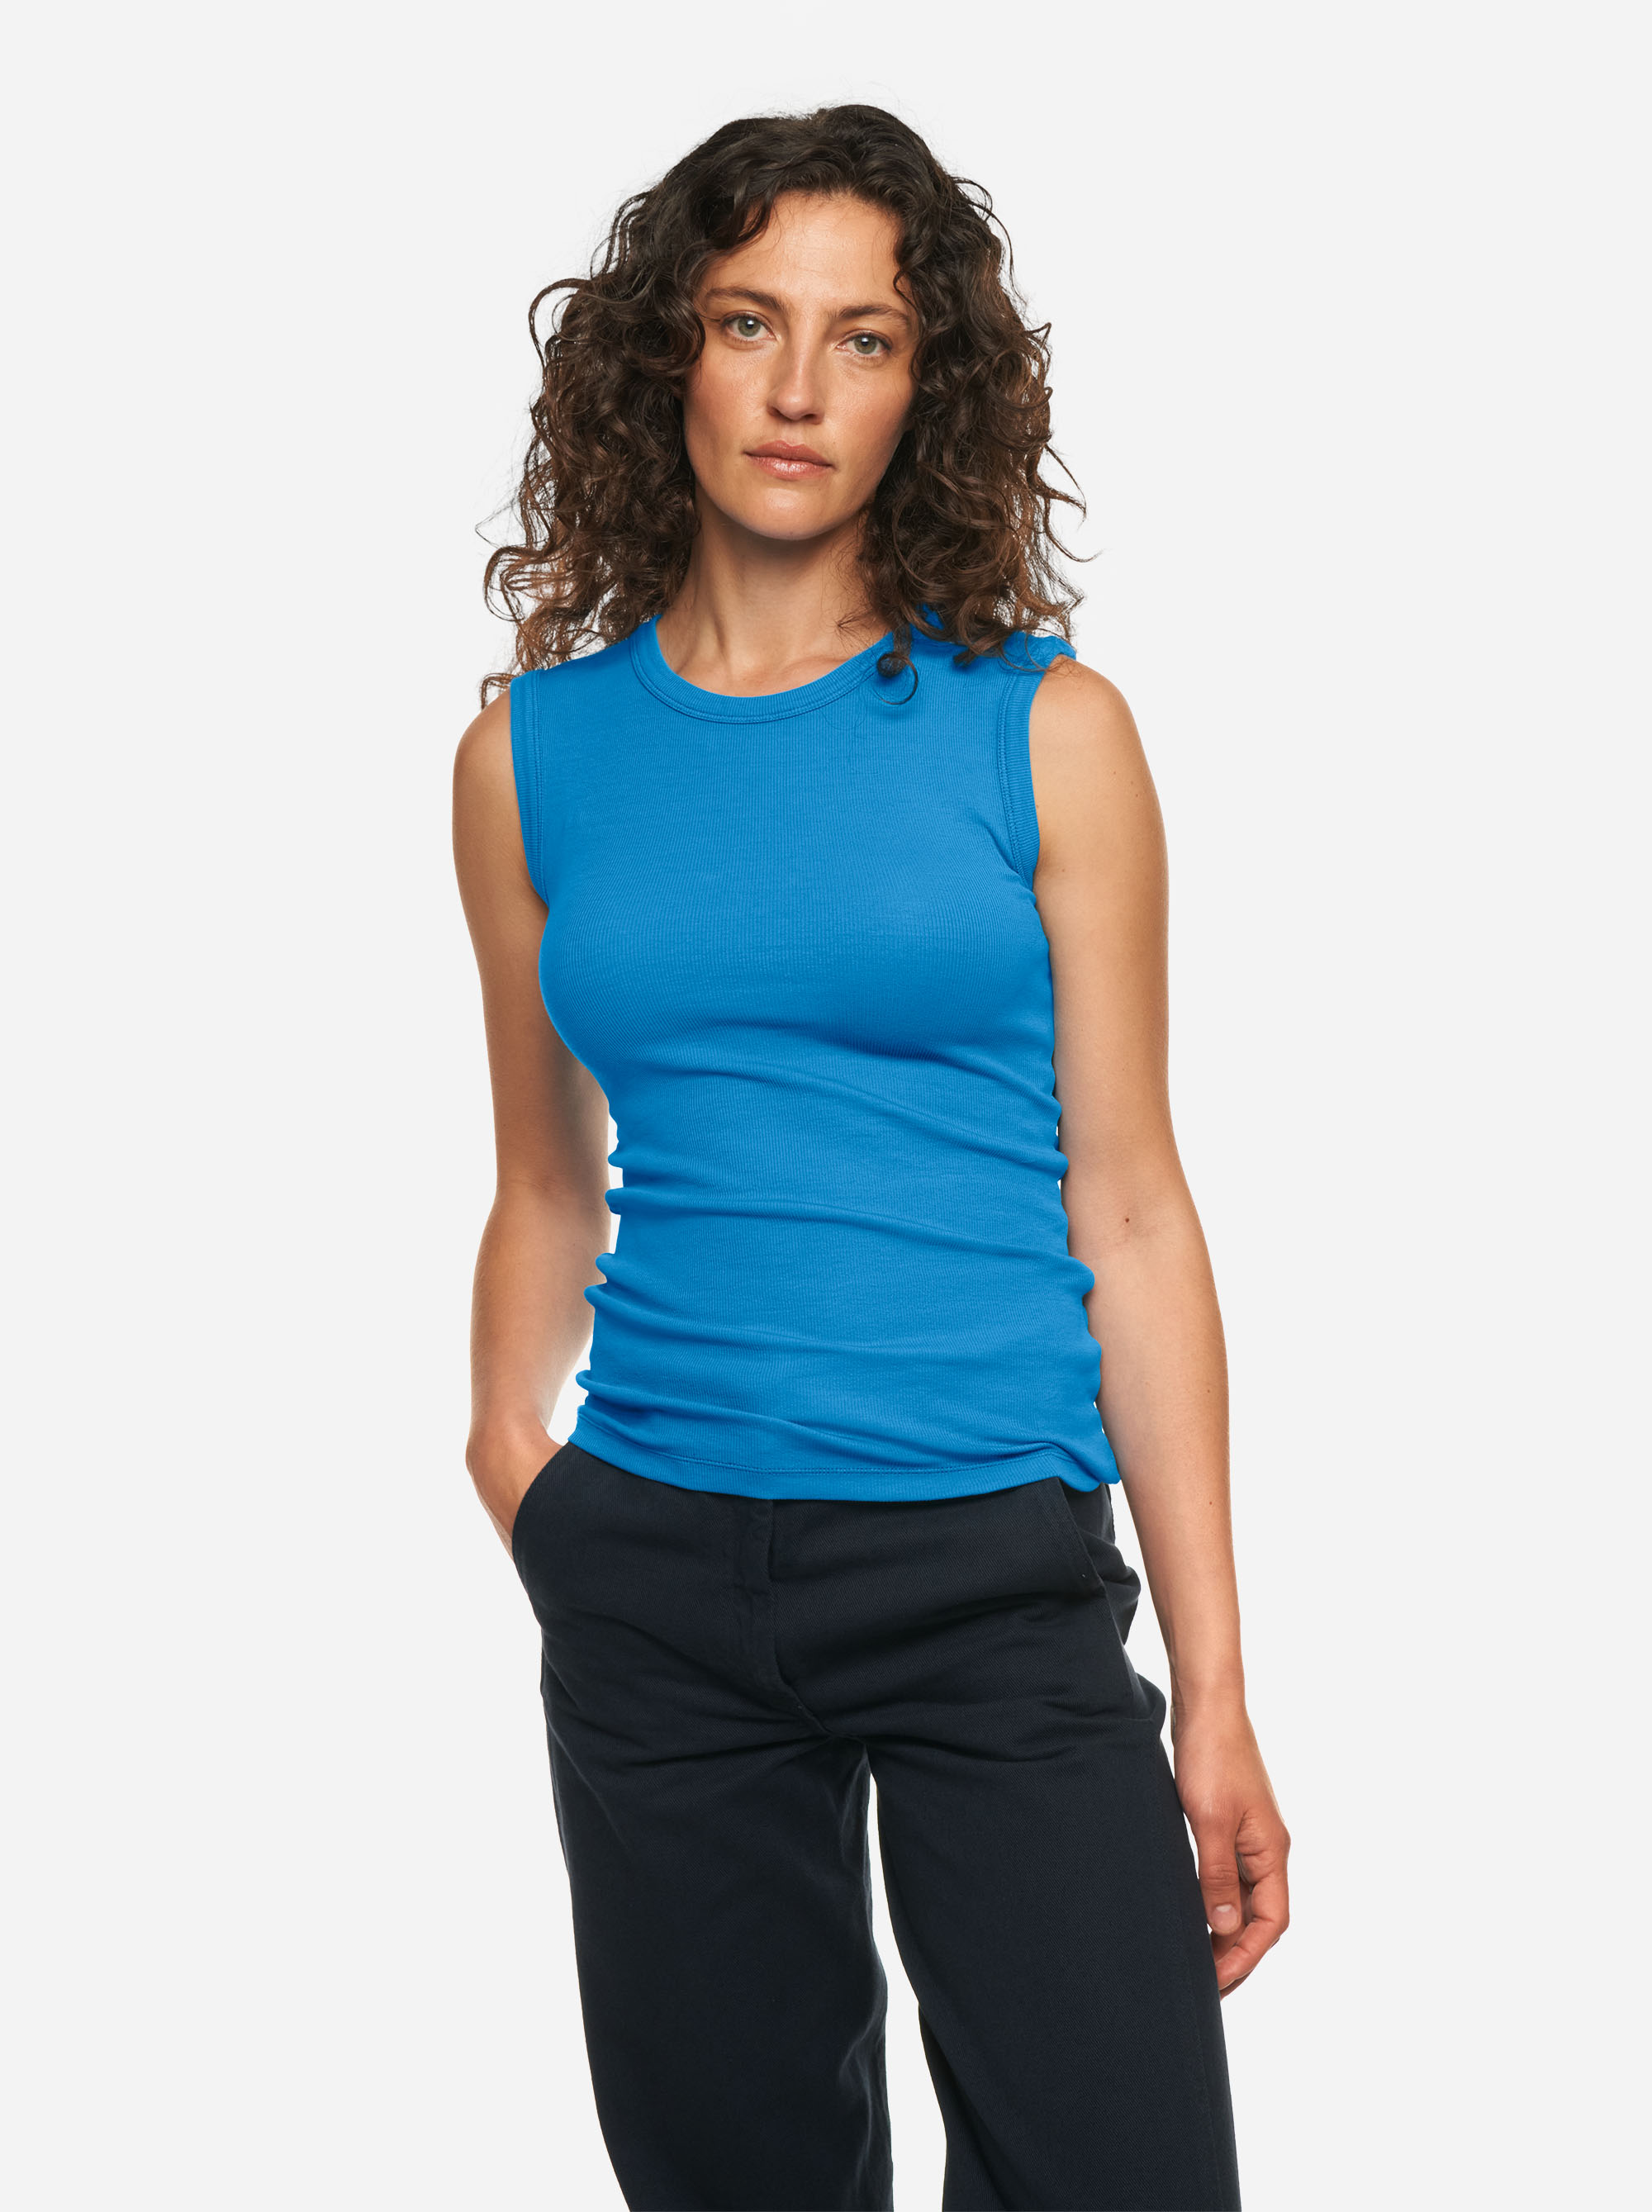 Teym - The Sleeveless T-Shirt - Women - Azure - 1